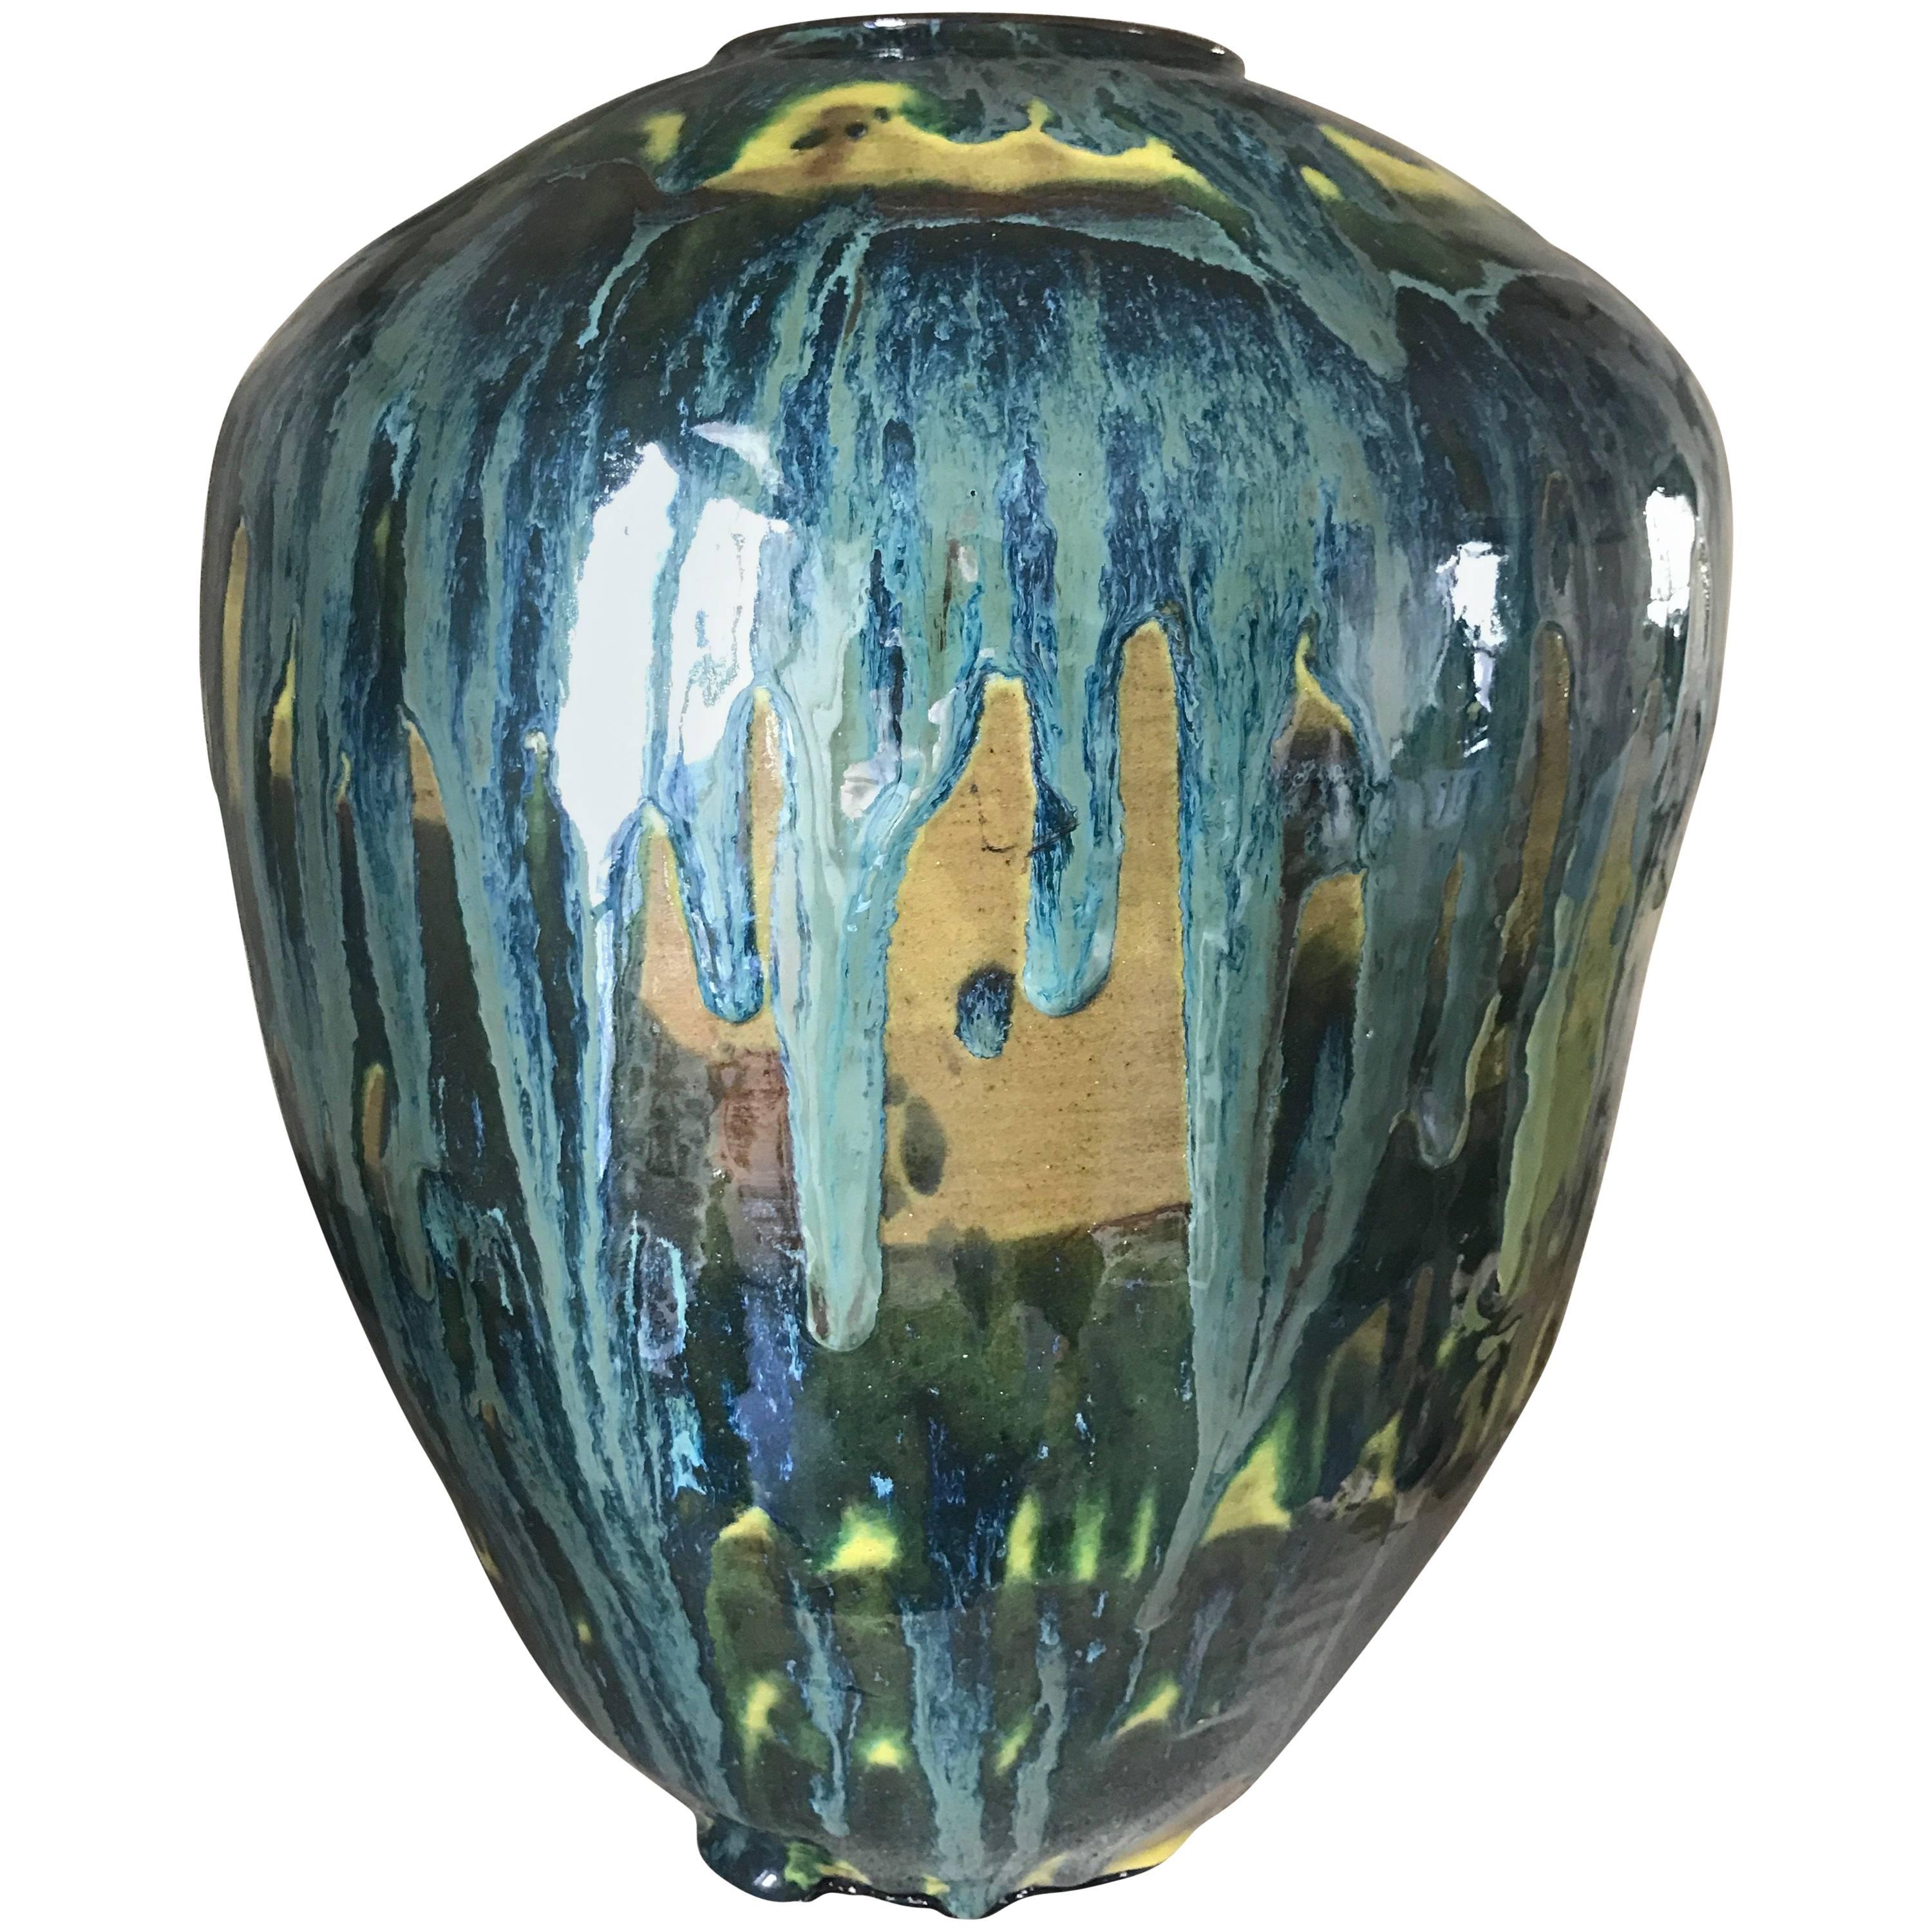 Handmade Mordern, Custom Glazed Ceramic Vase #3, Vessel, Decorative Object For Sale